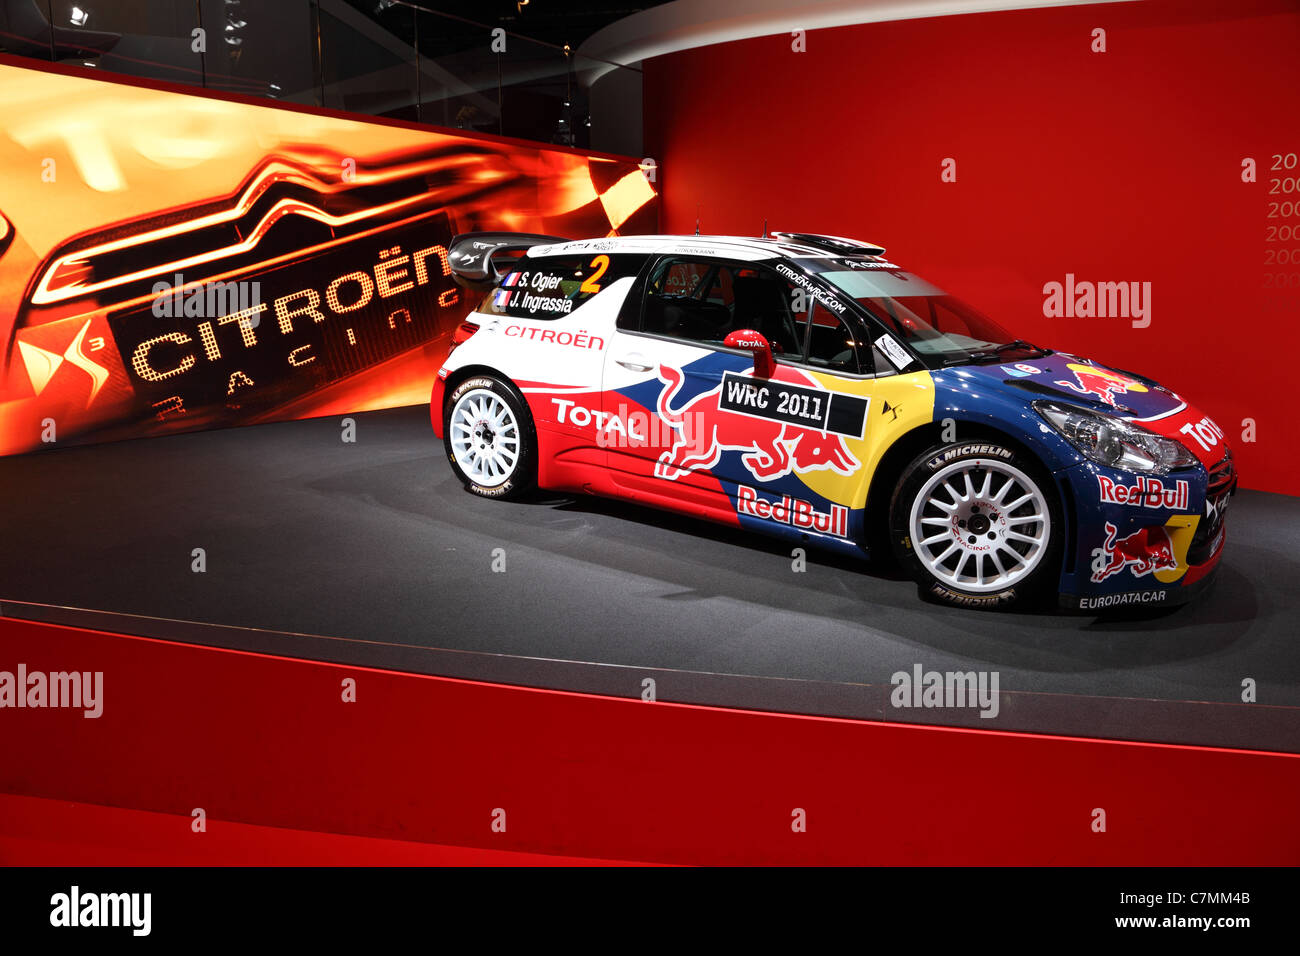 La Citroen DS3 WRC Rally Car Racing al sessantaquattresimo IAA (Internationale Automobil Ausstellung) Foto Stock